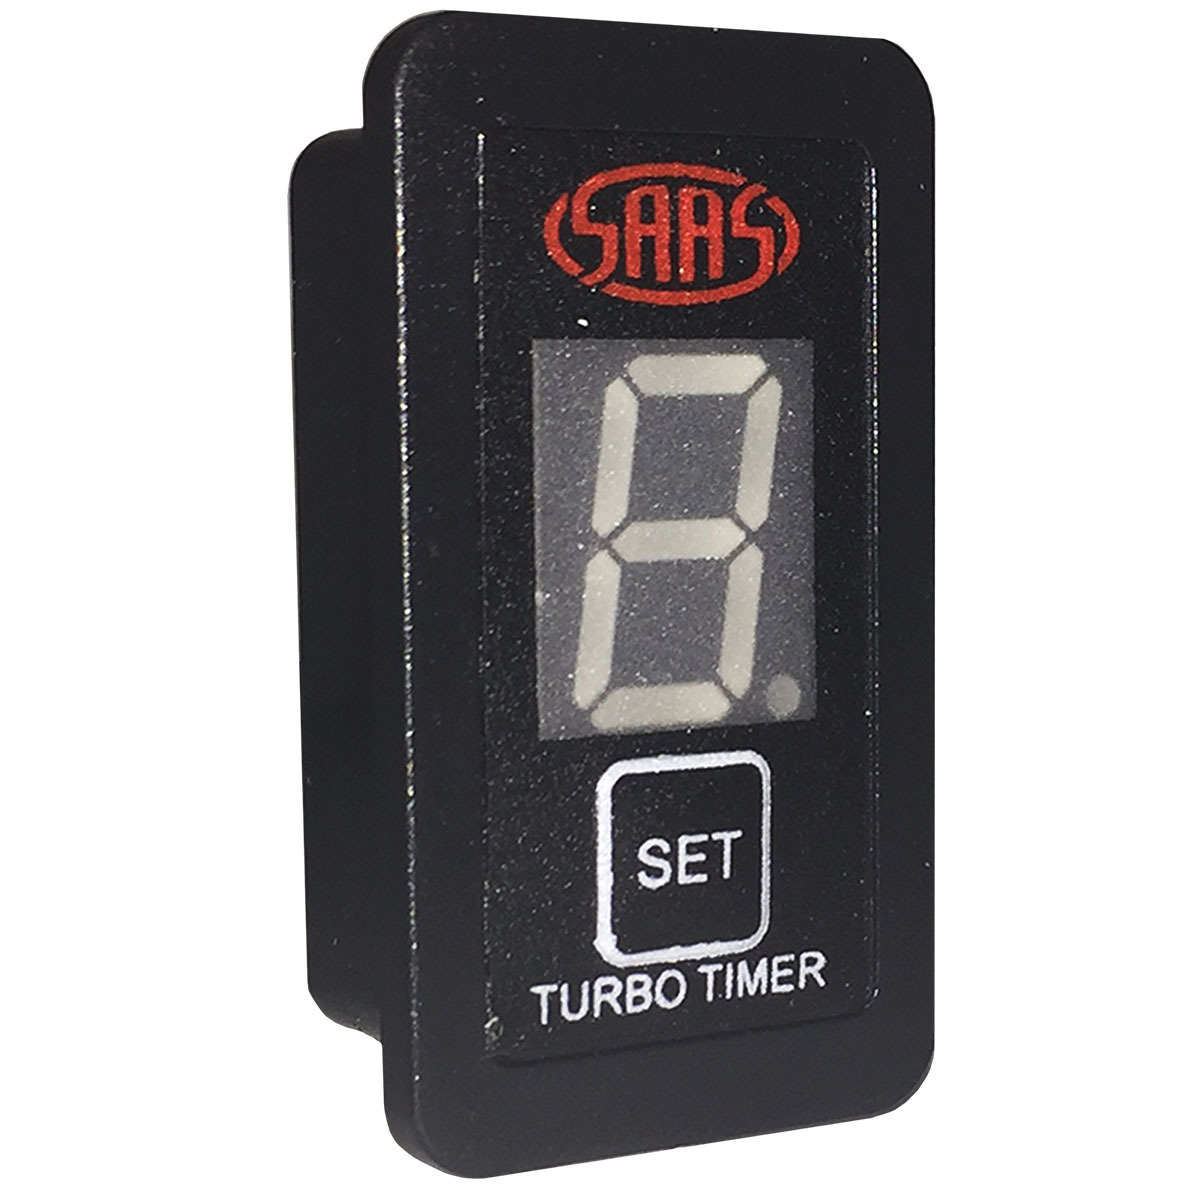 Turbo Timer Digital Switch Gauge Auto Carling 49 x 24